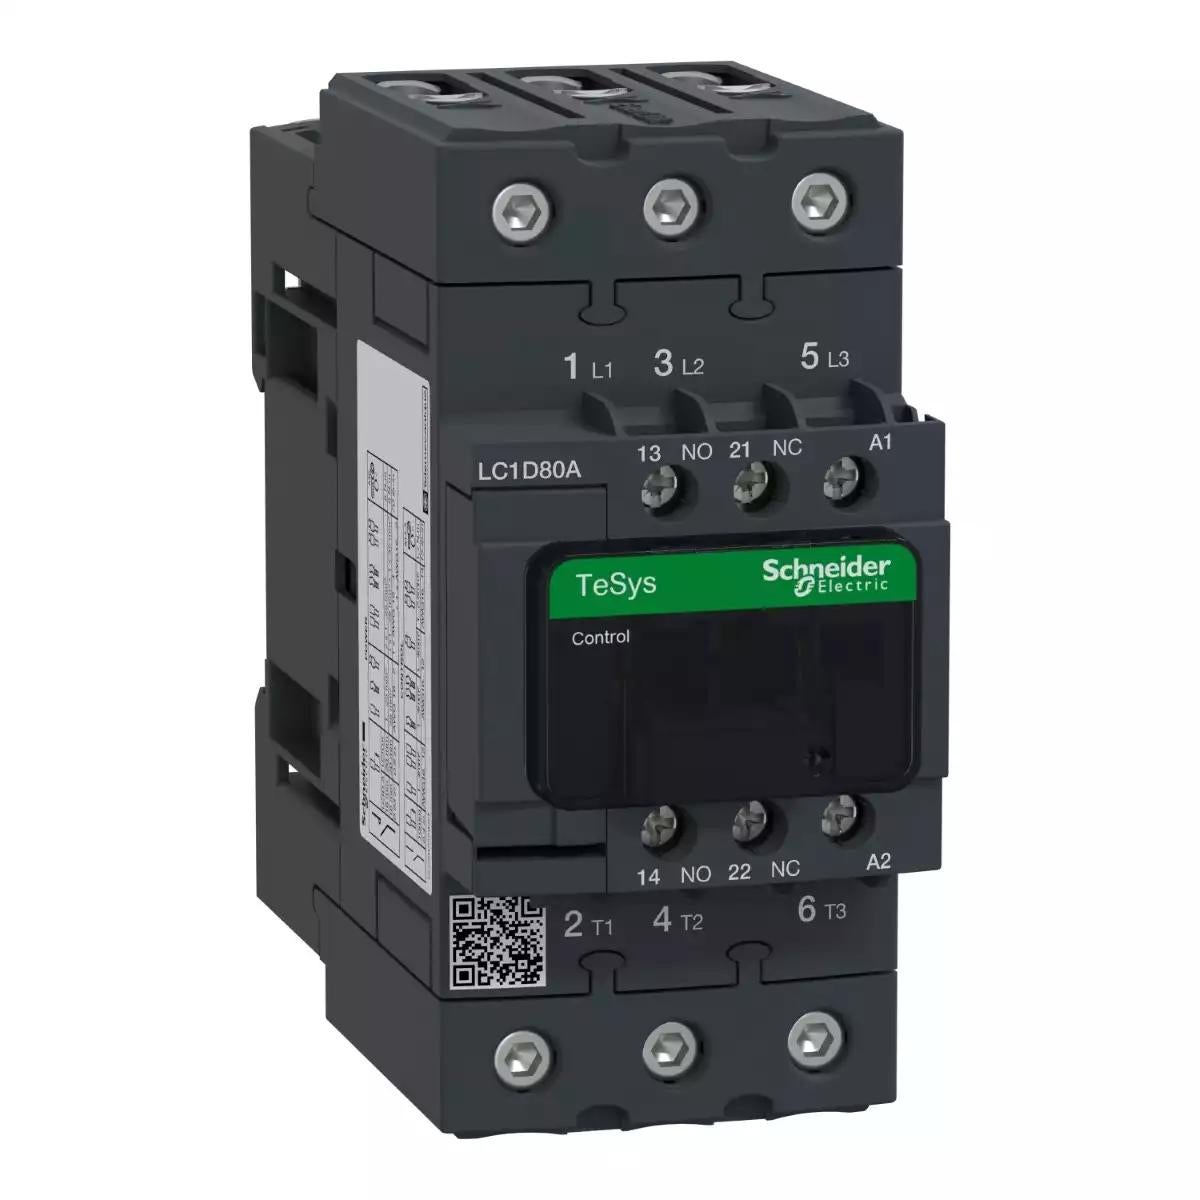 TeSys D contactor 3P 66A AC-3 up to 440V coil 115V AC 50/60Hz